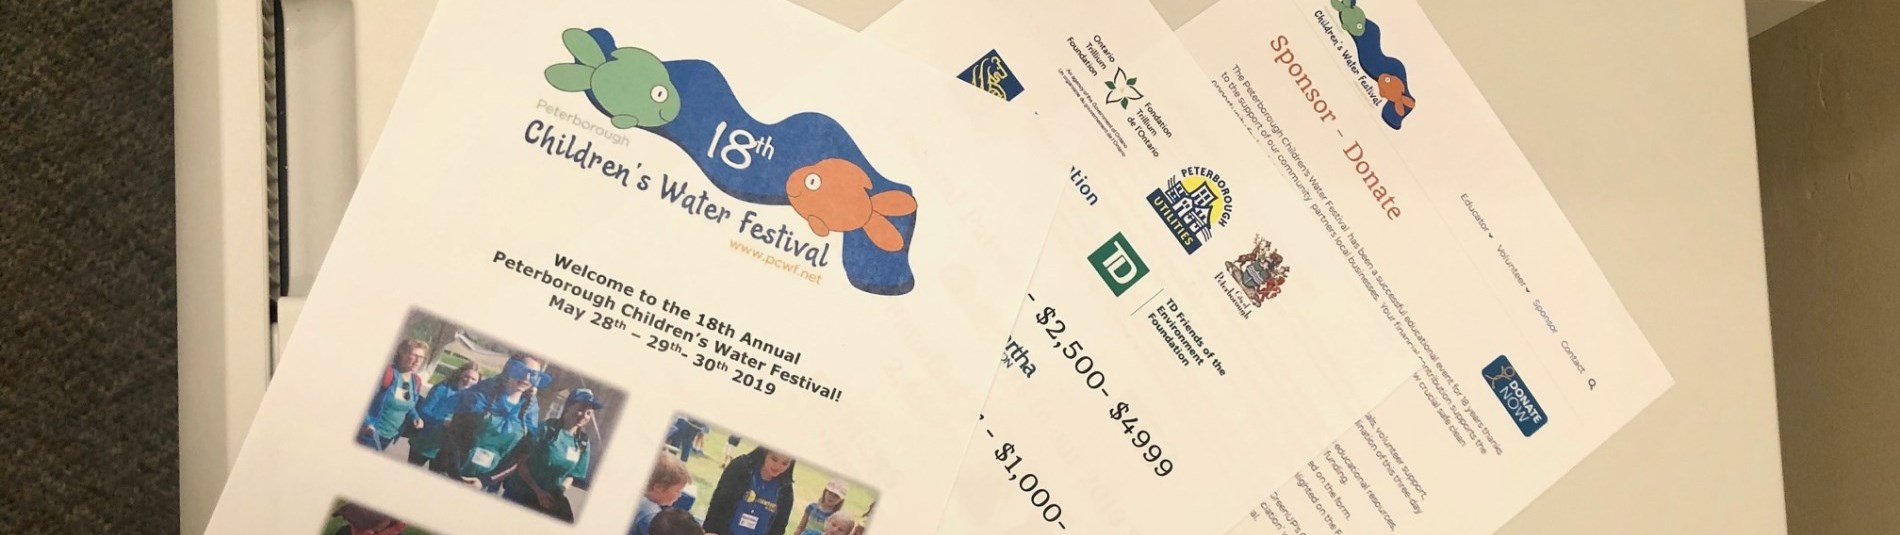 Peterborough Children's Water Festival Paper Handouts